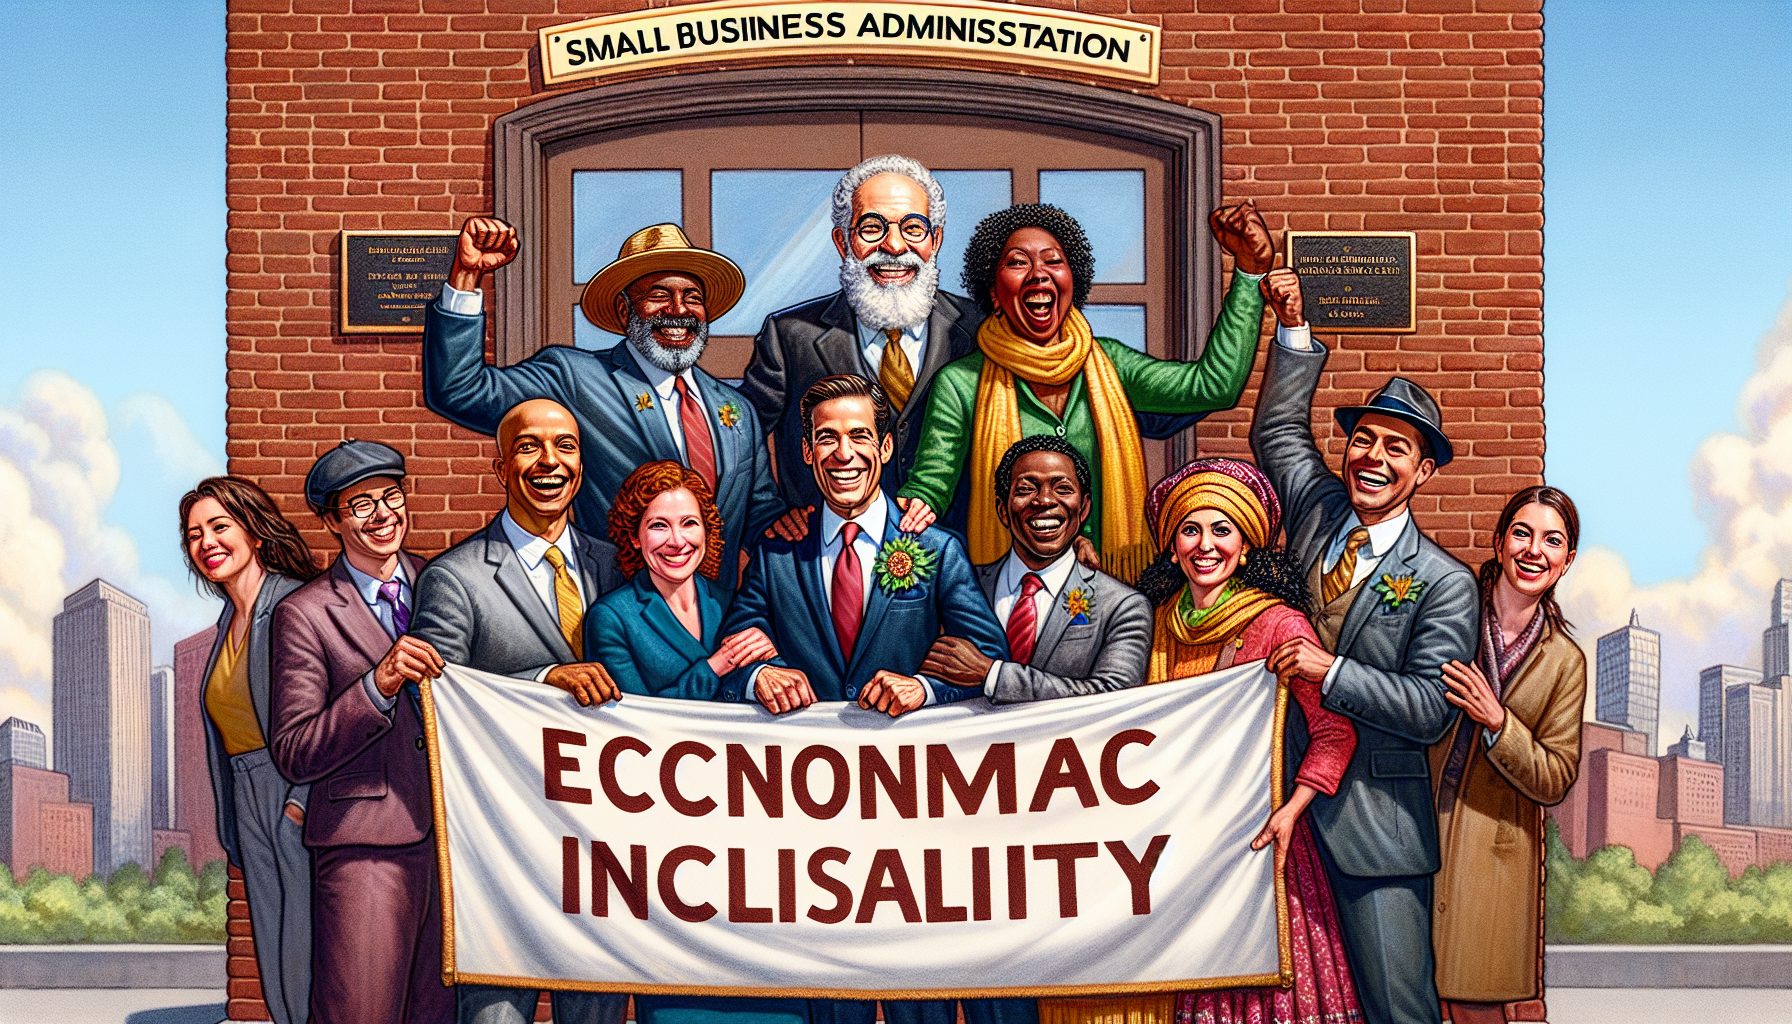 "Economic Inclusivity"